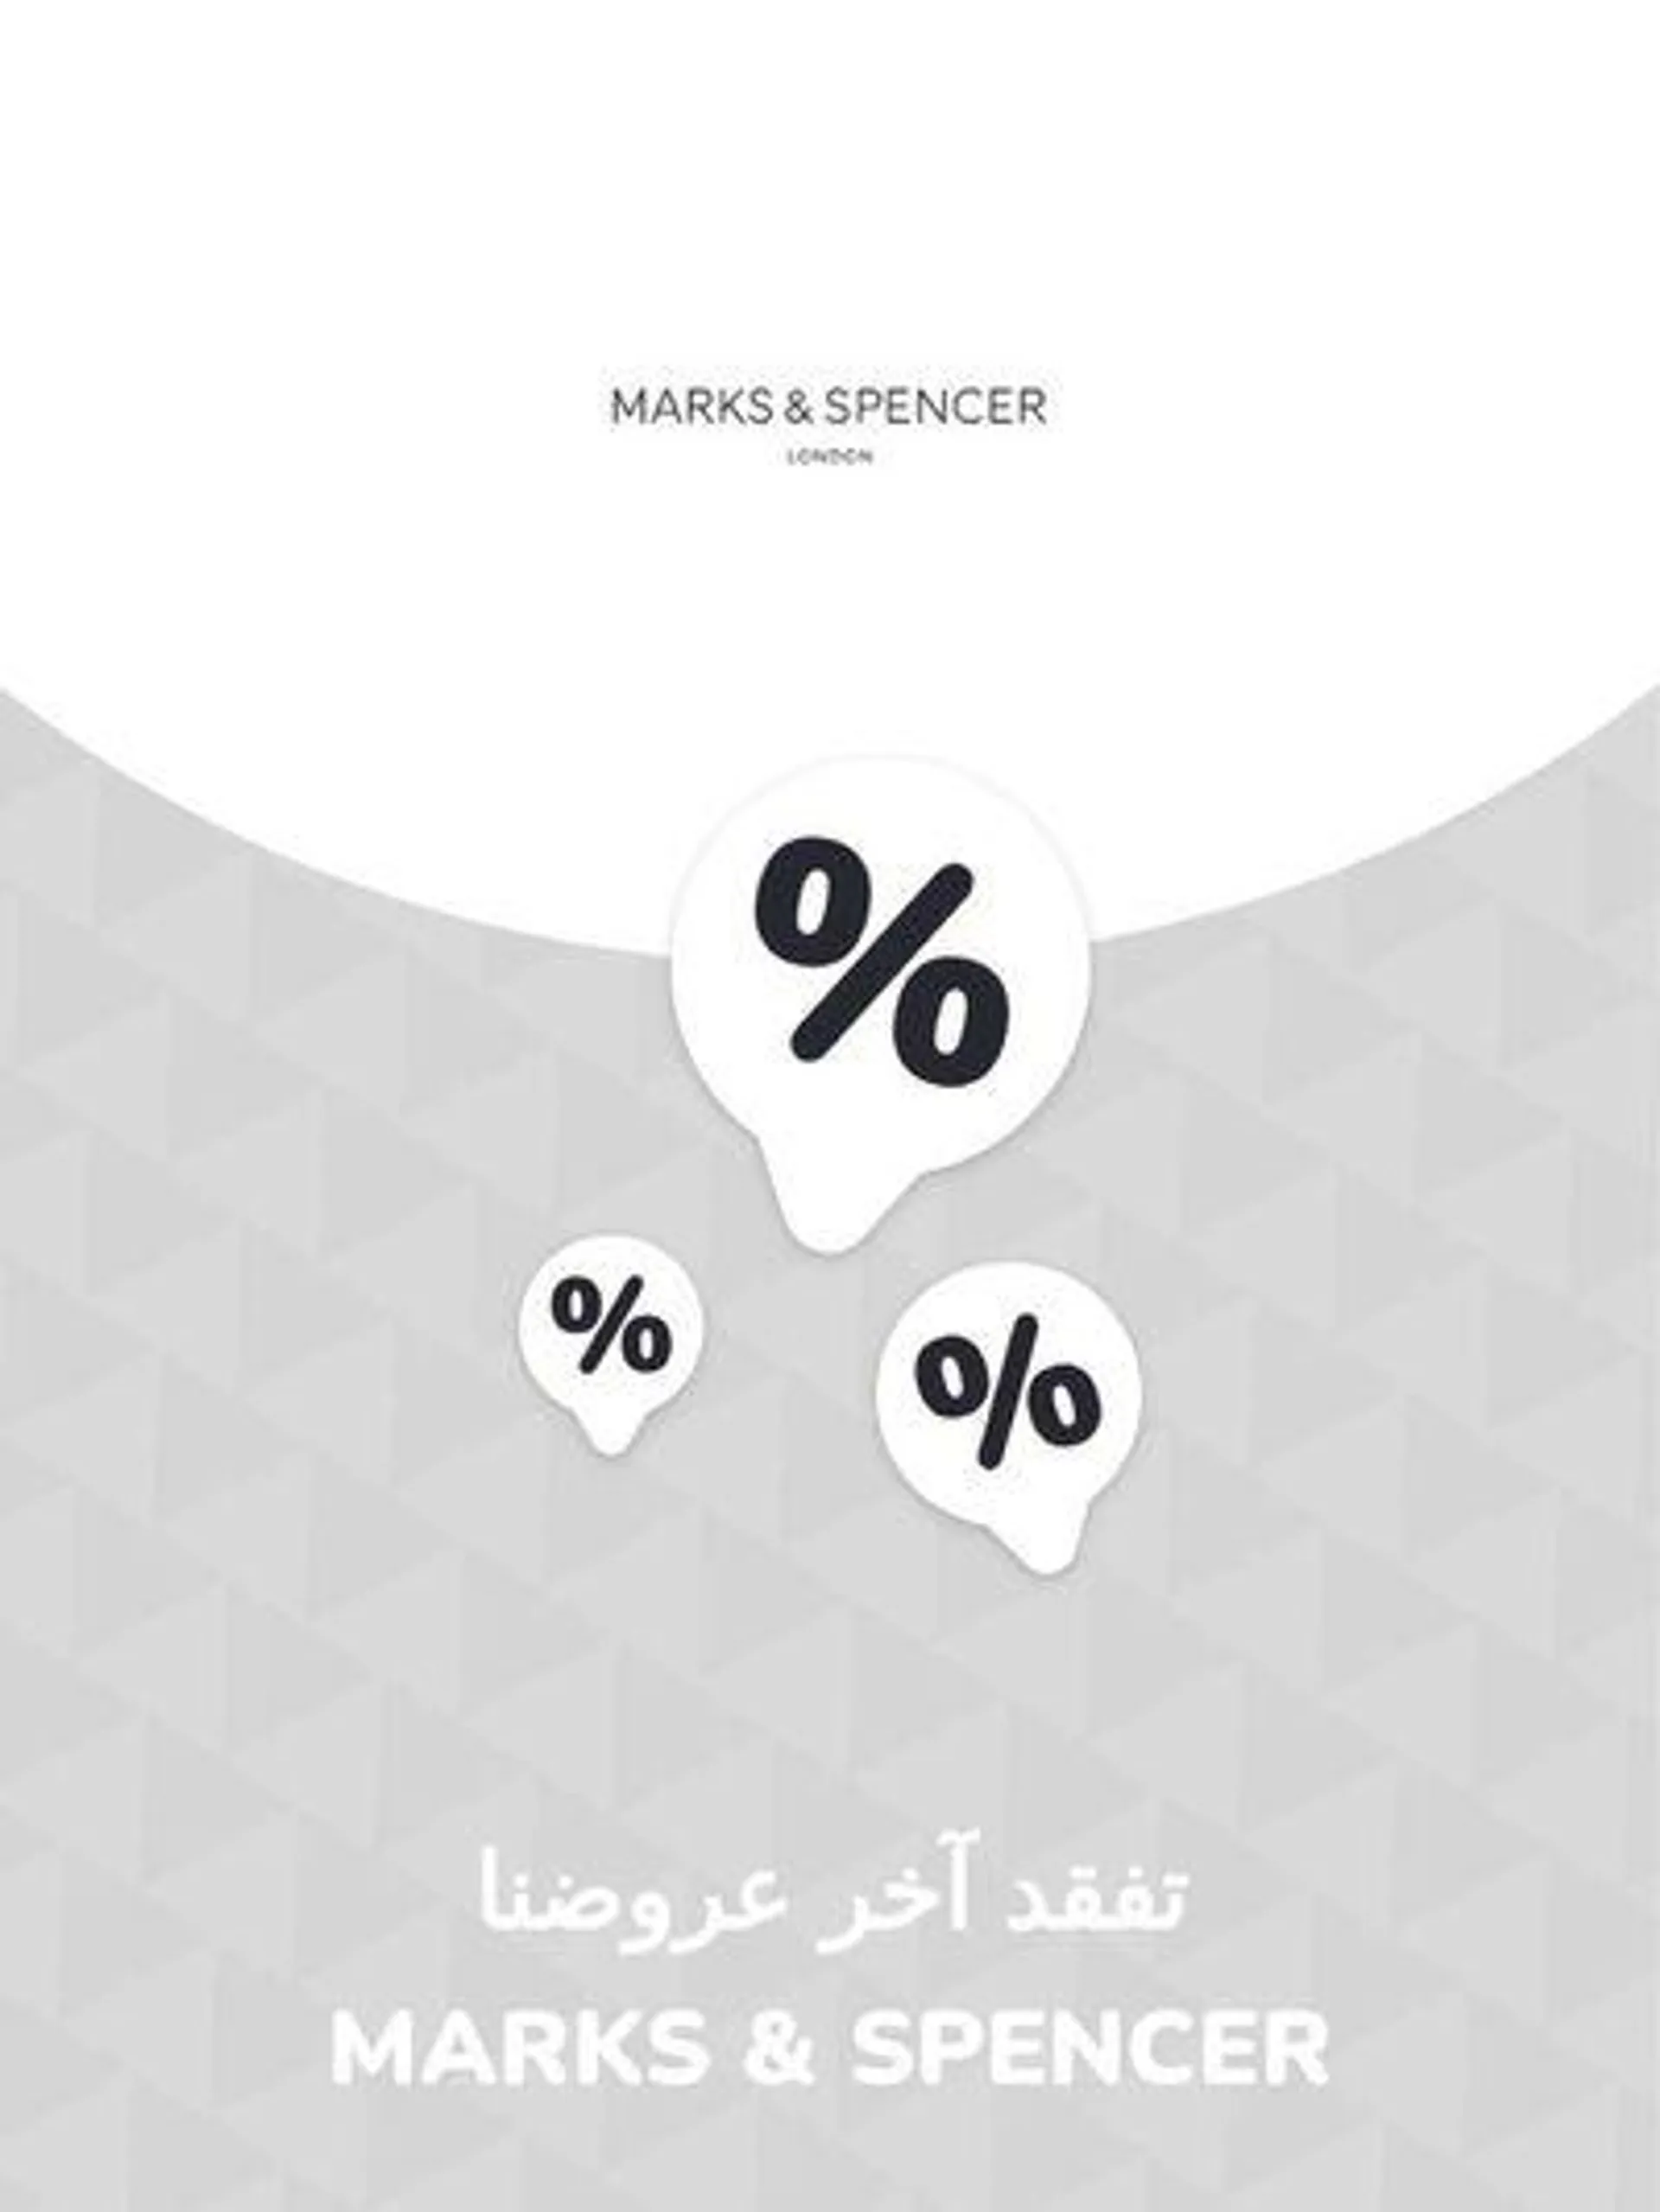 Offers Marks & Spencer - 1